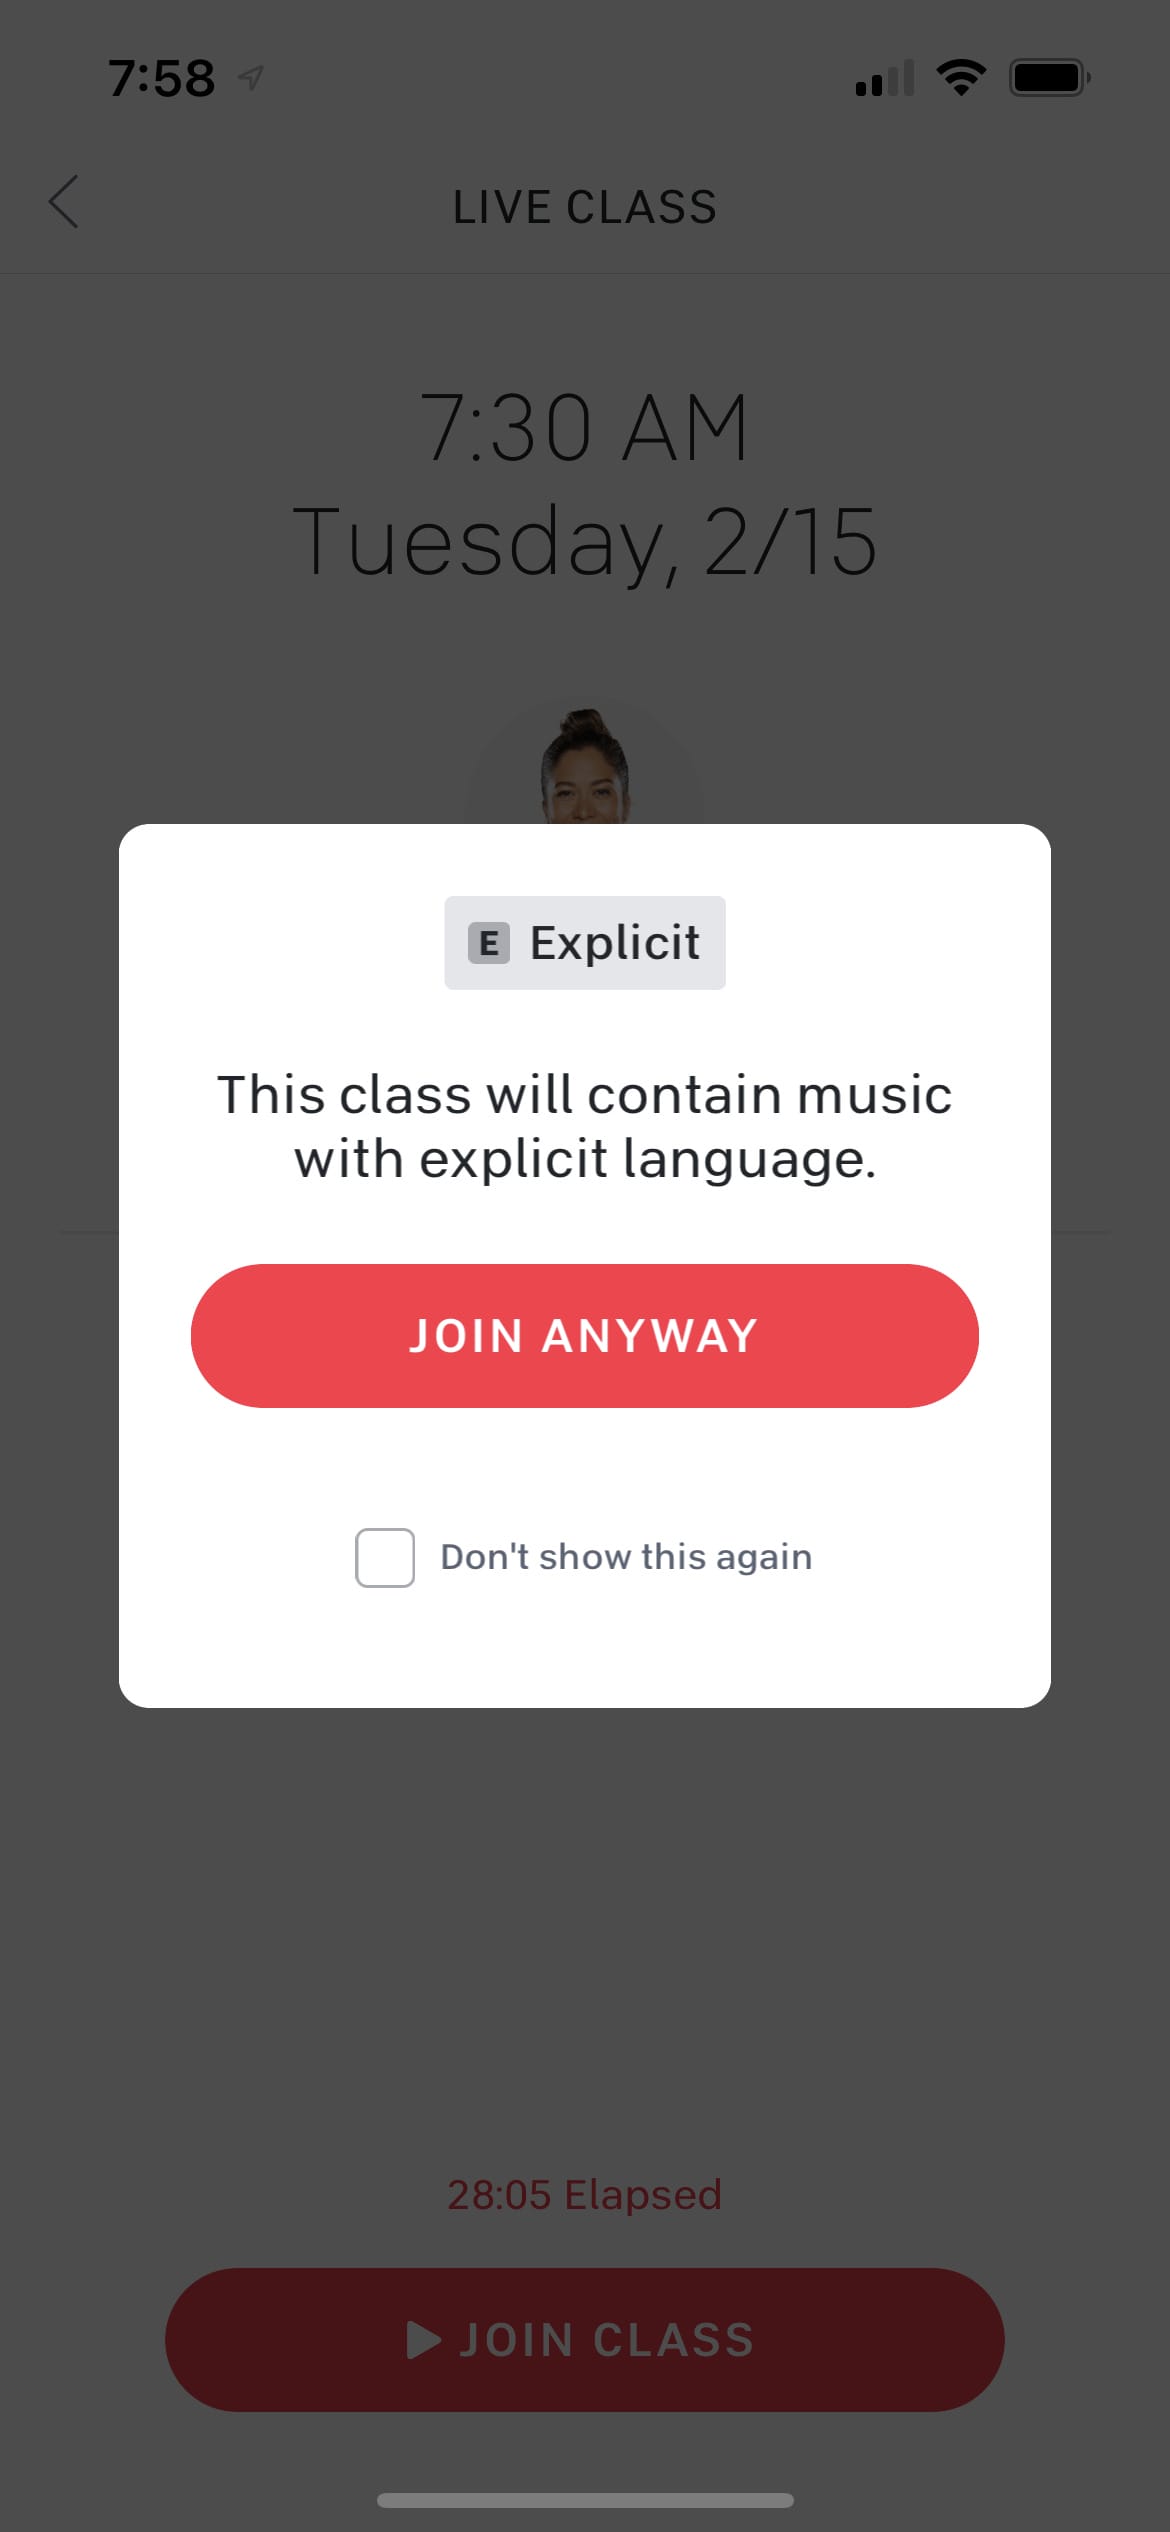 Explicit music pop-up notification on a live Peloton class.